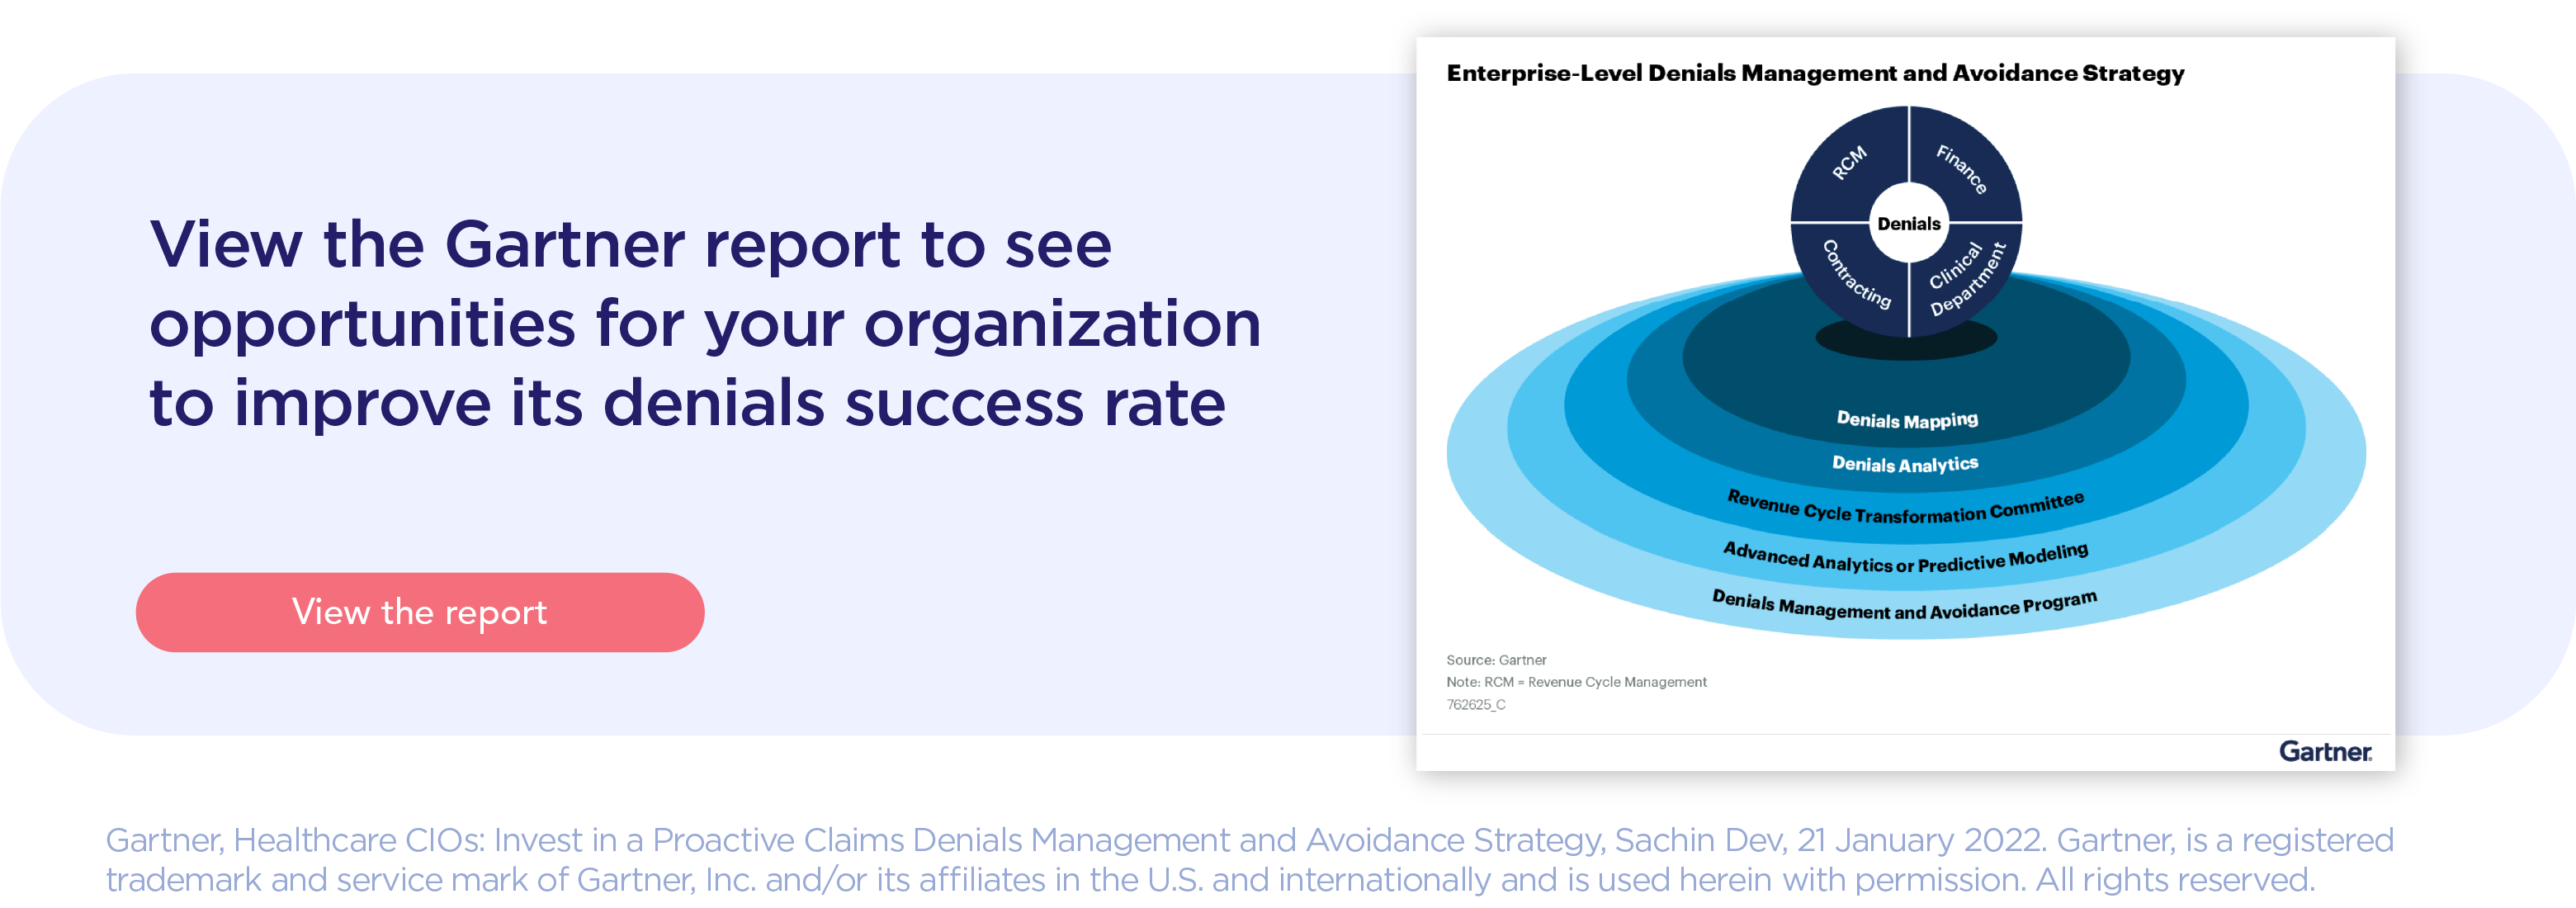 Gartner report model: Enterprise-level denials management and avoidance strategy. View the report.